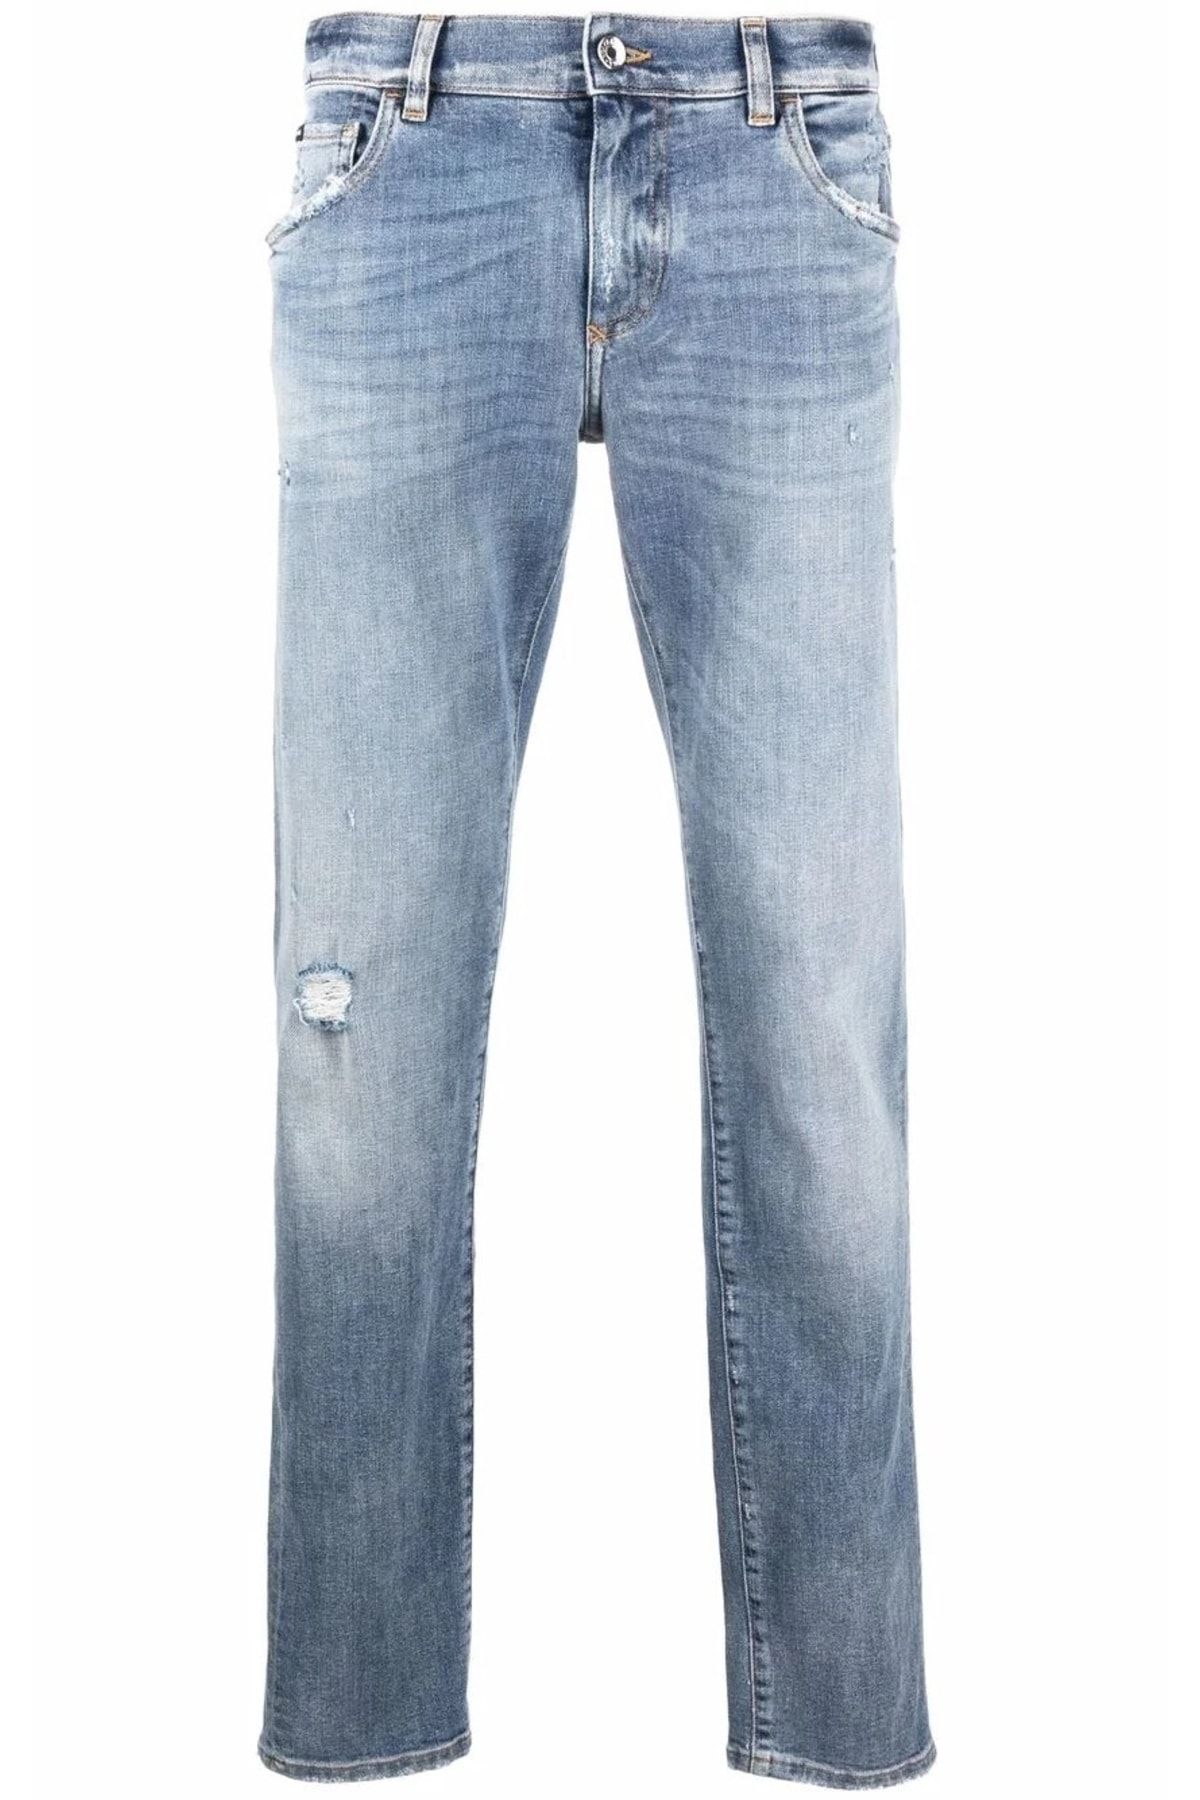 Dolce&Gabbana Distressed Slim Fit Jeans Gy07ldg8eu4